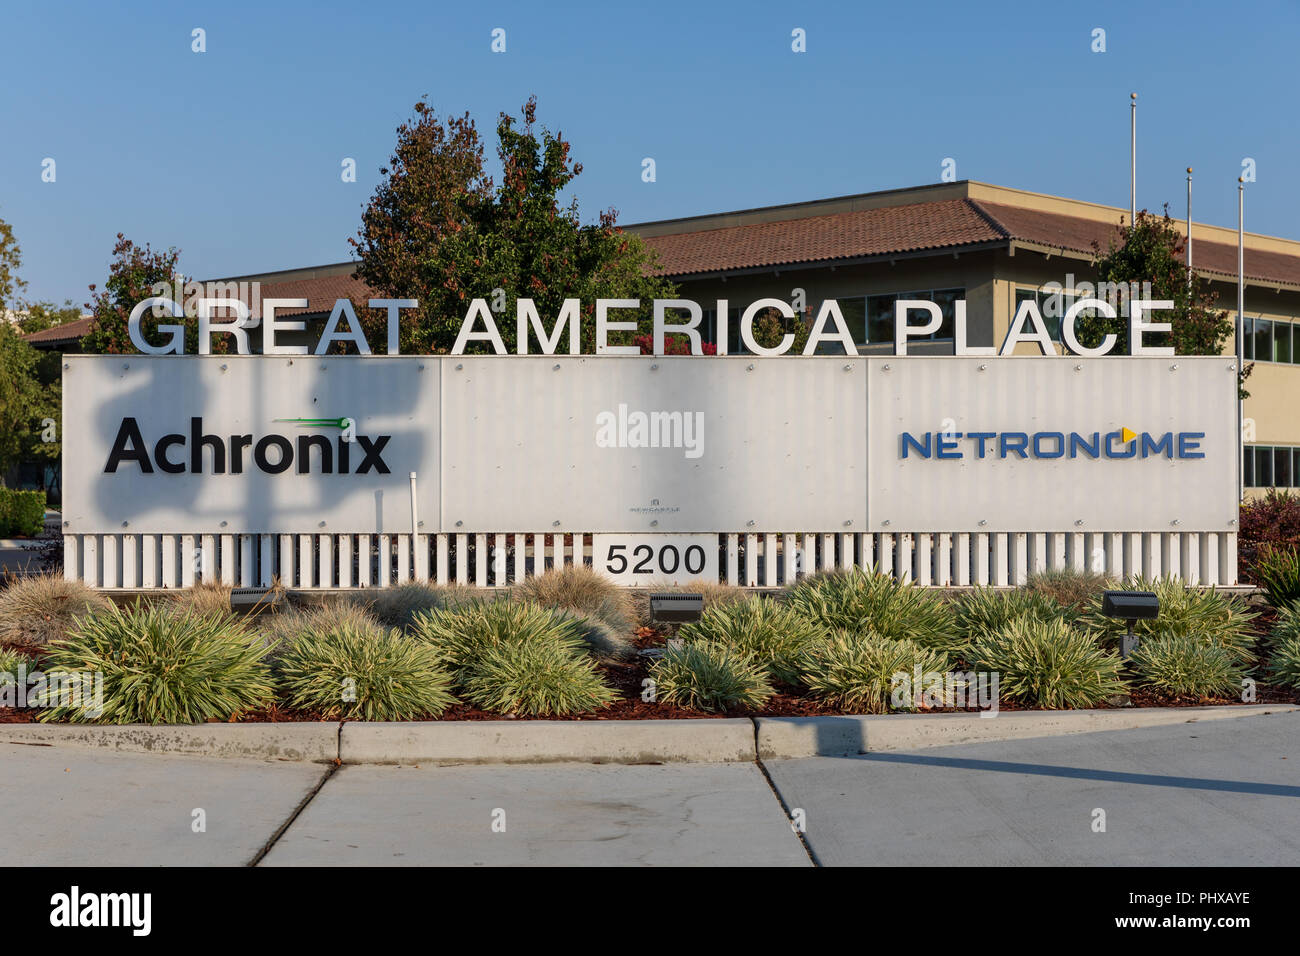 Great America Place – Achronix and Netronome – sign; Santa Clara, California Stock Photo